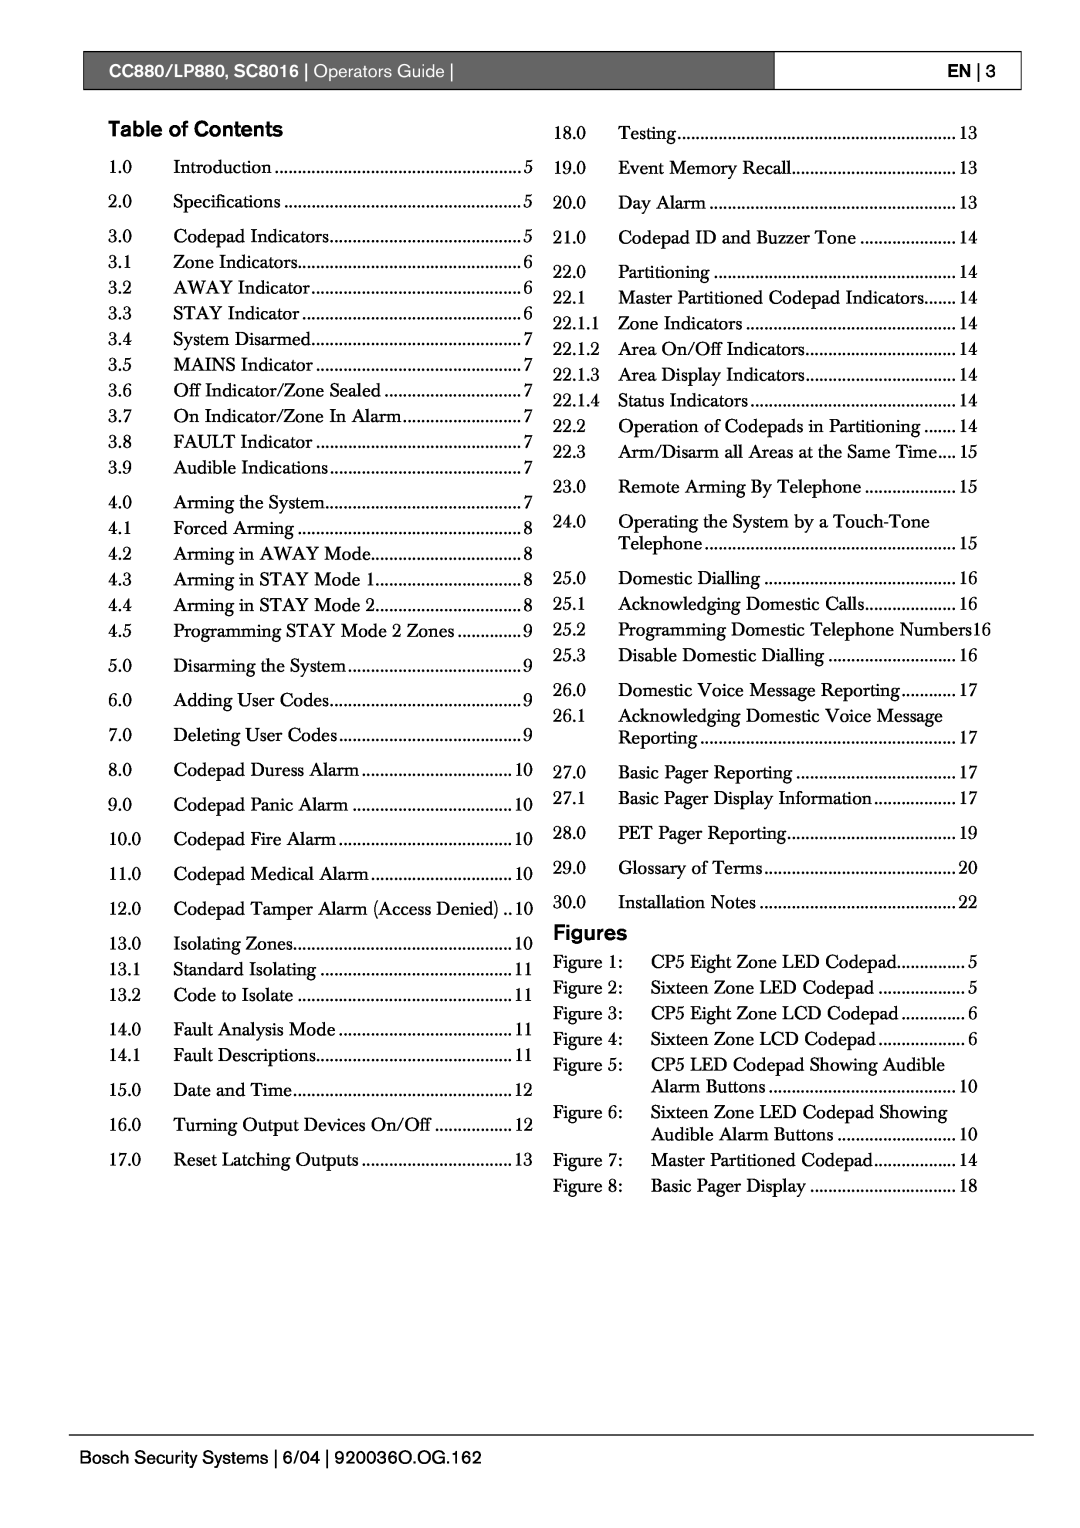 Bosch Appliances manual Table of Contents, Figures, CC880/LP880, SC8016 Operators Guide 